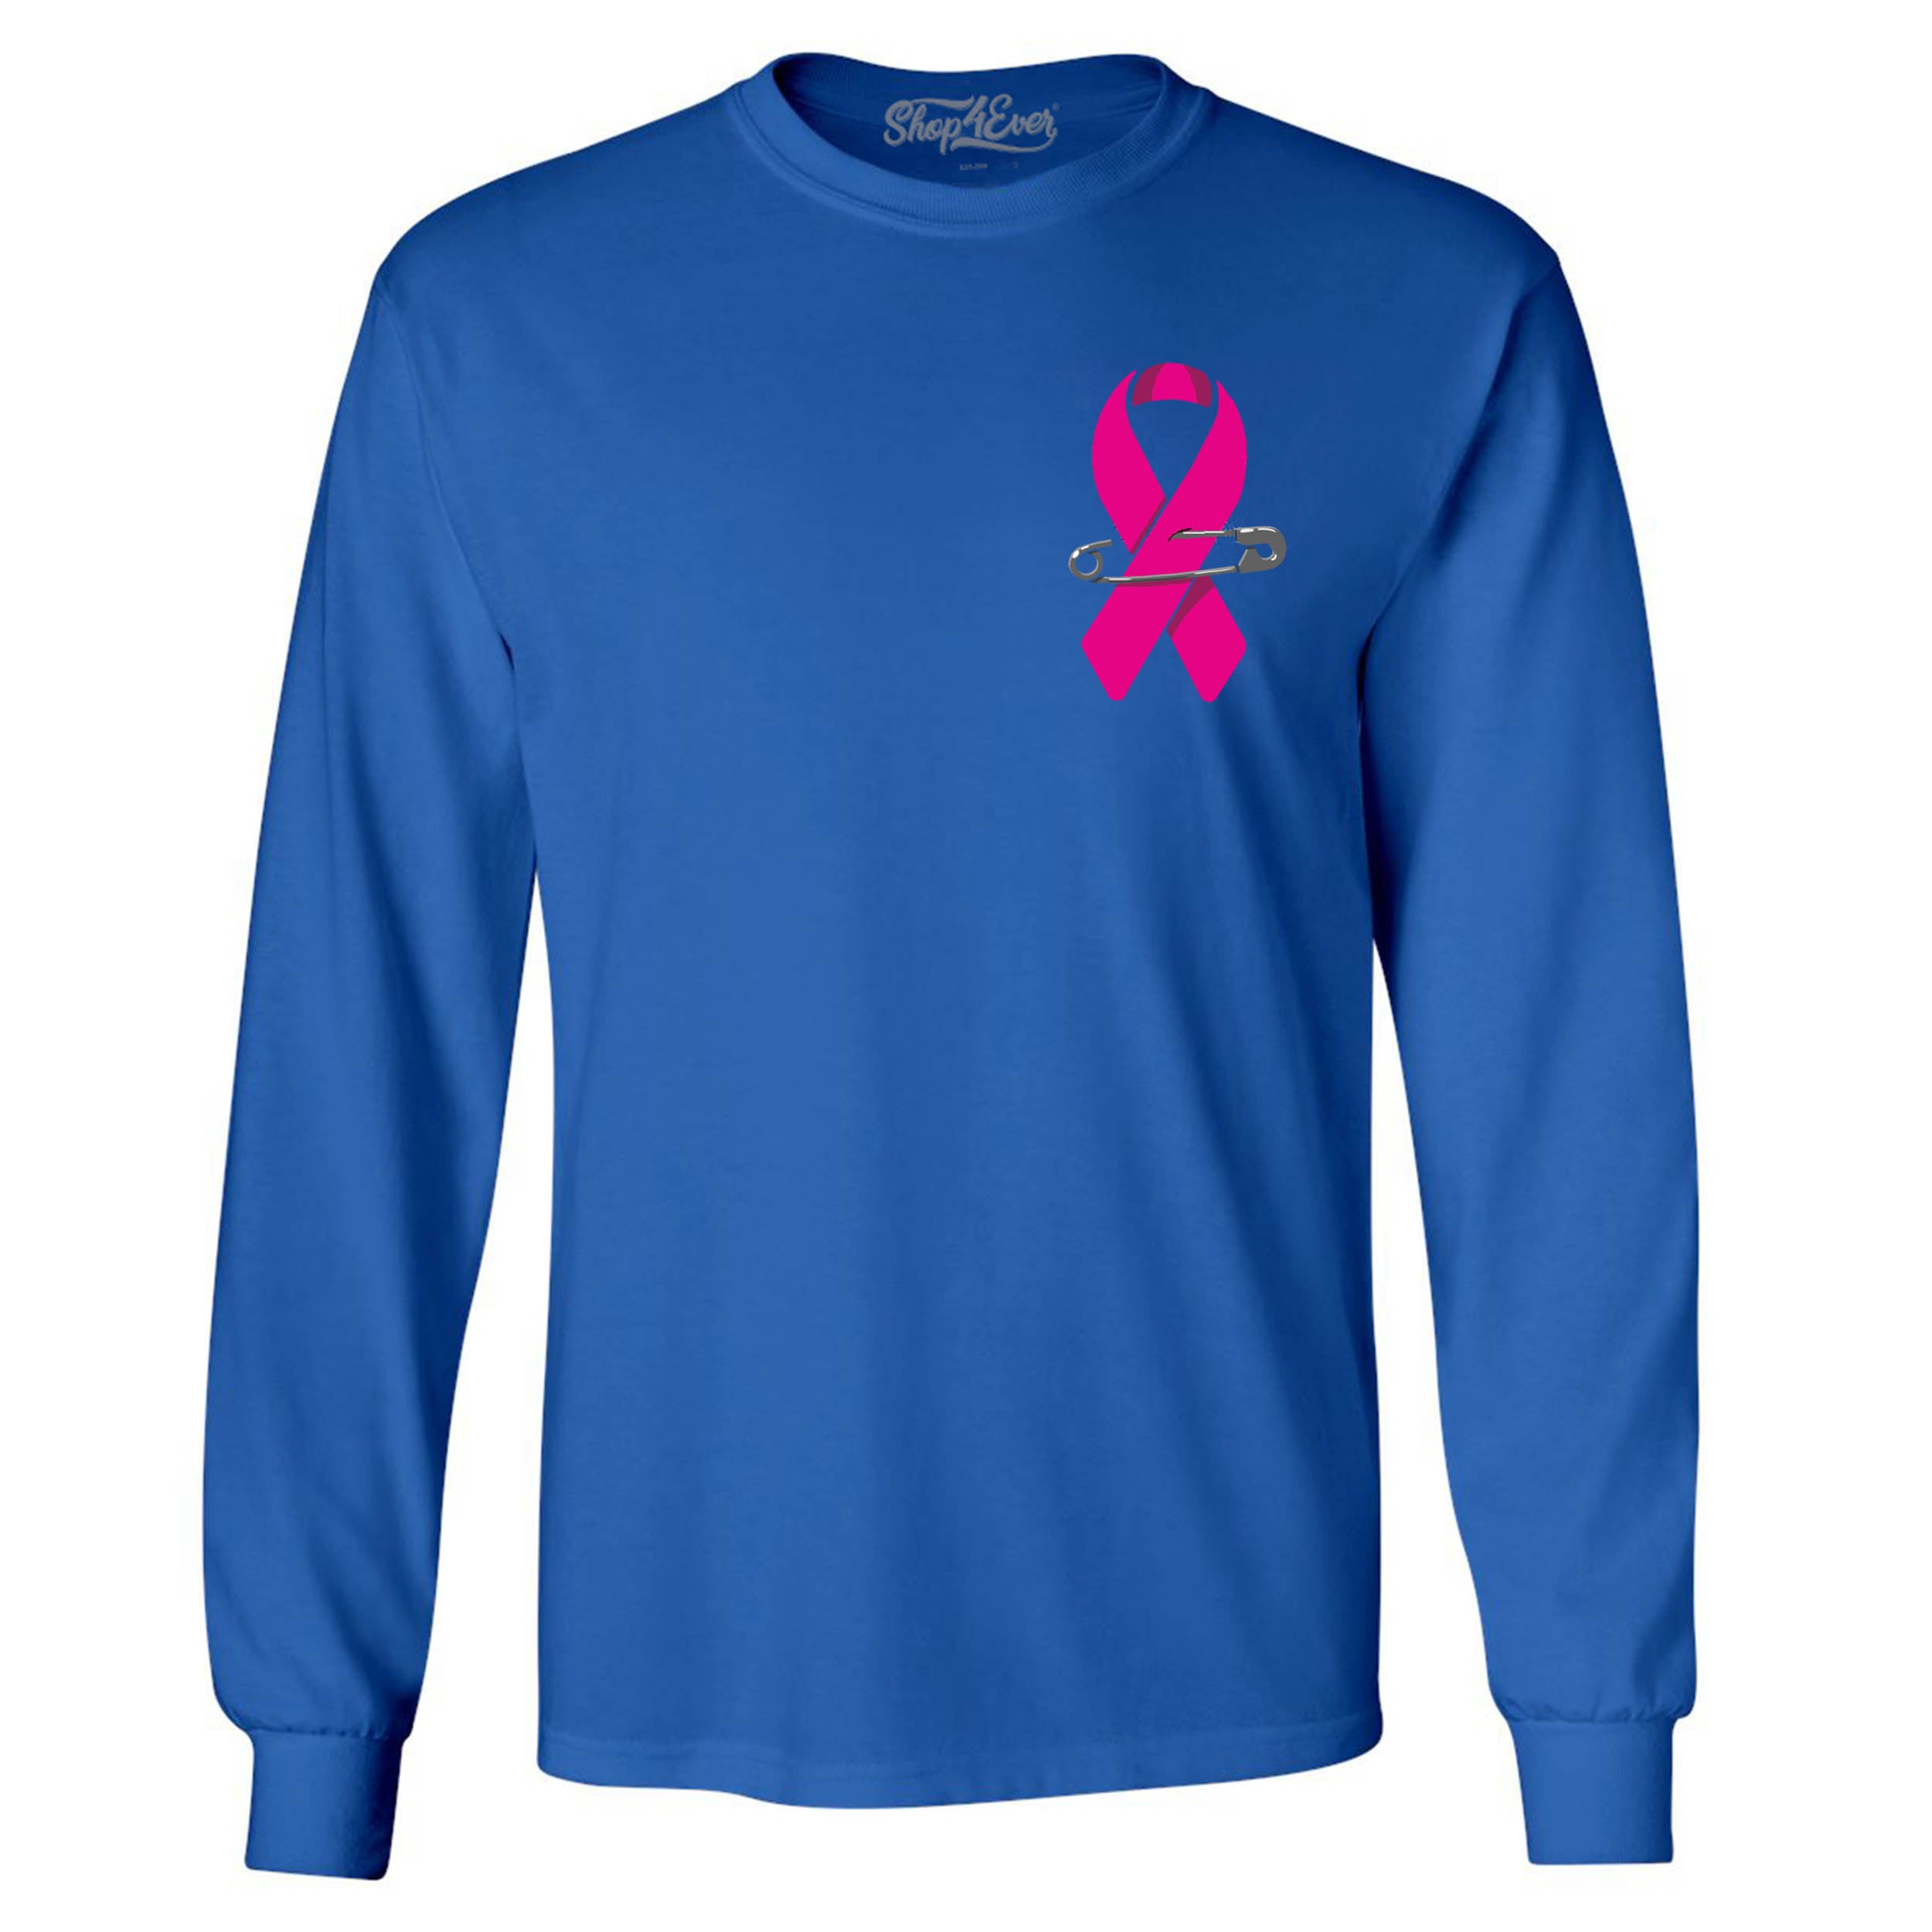 Pink Breast Cancer Ribbon Pin Support Awareness Men's Long Sleeve Shirt